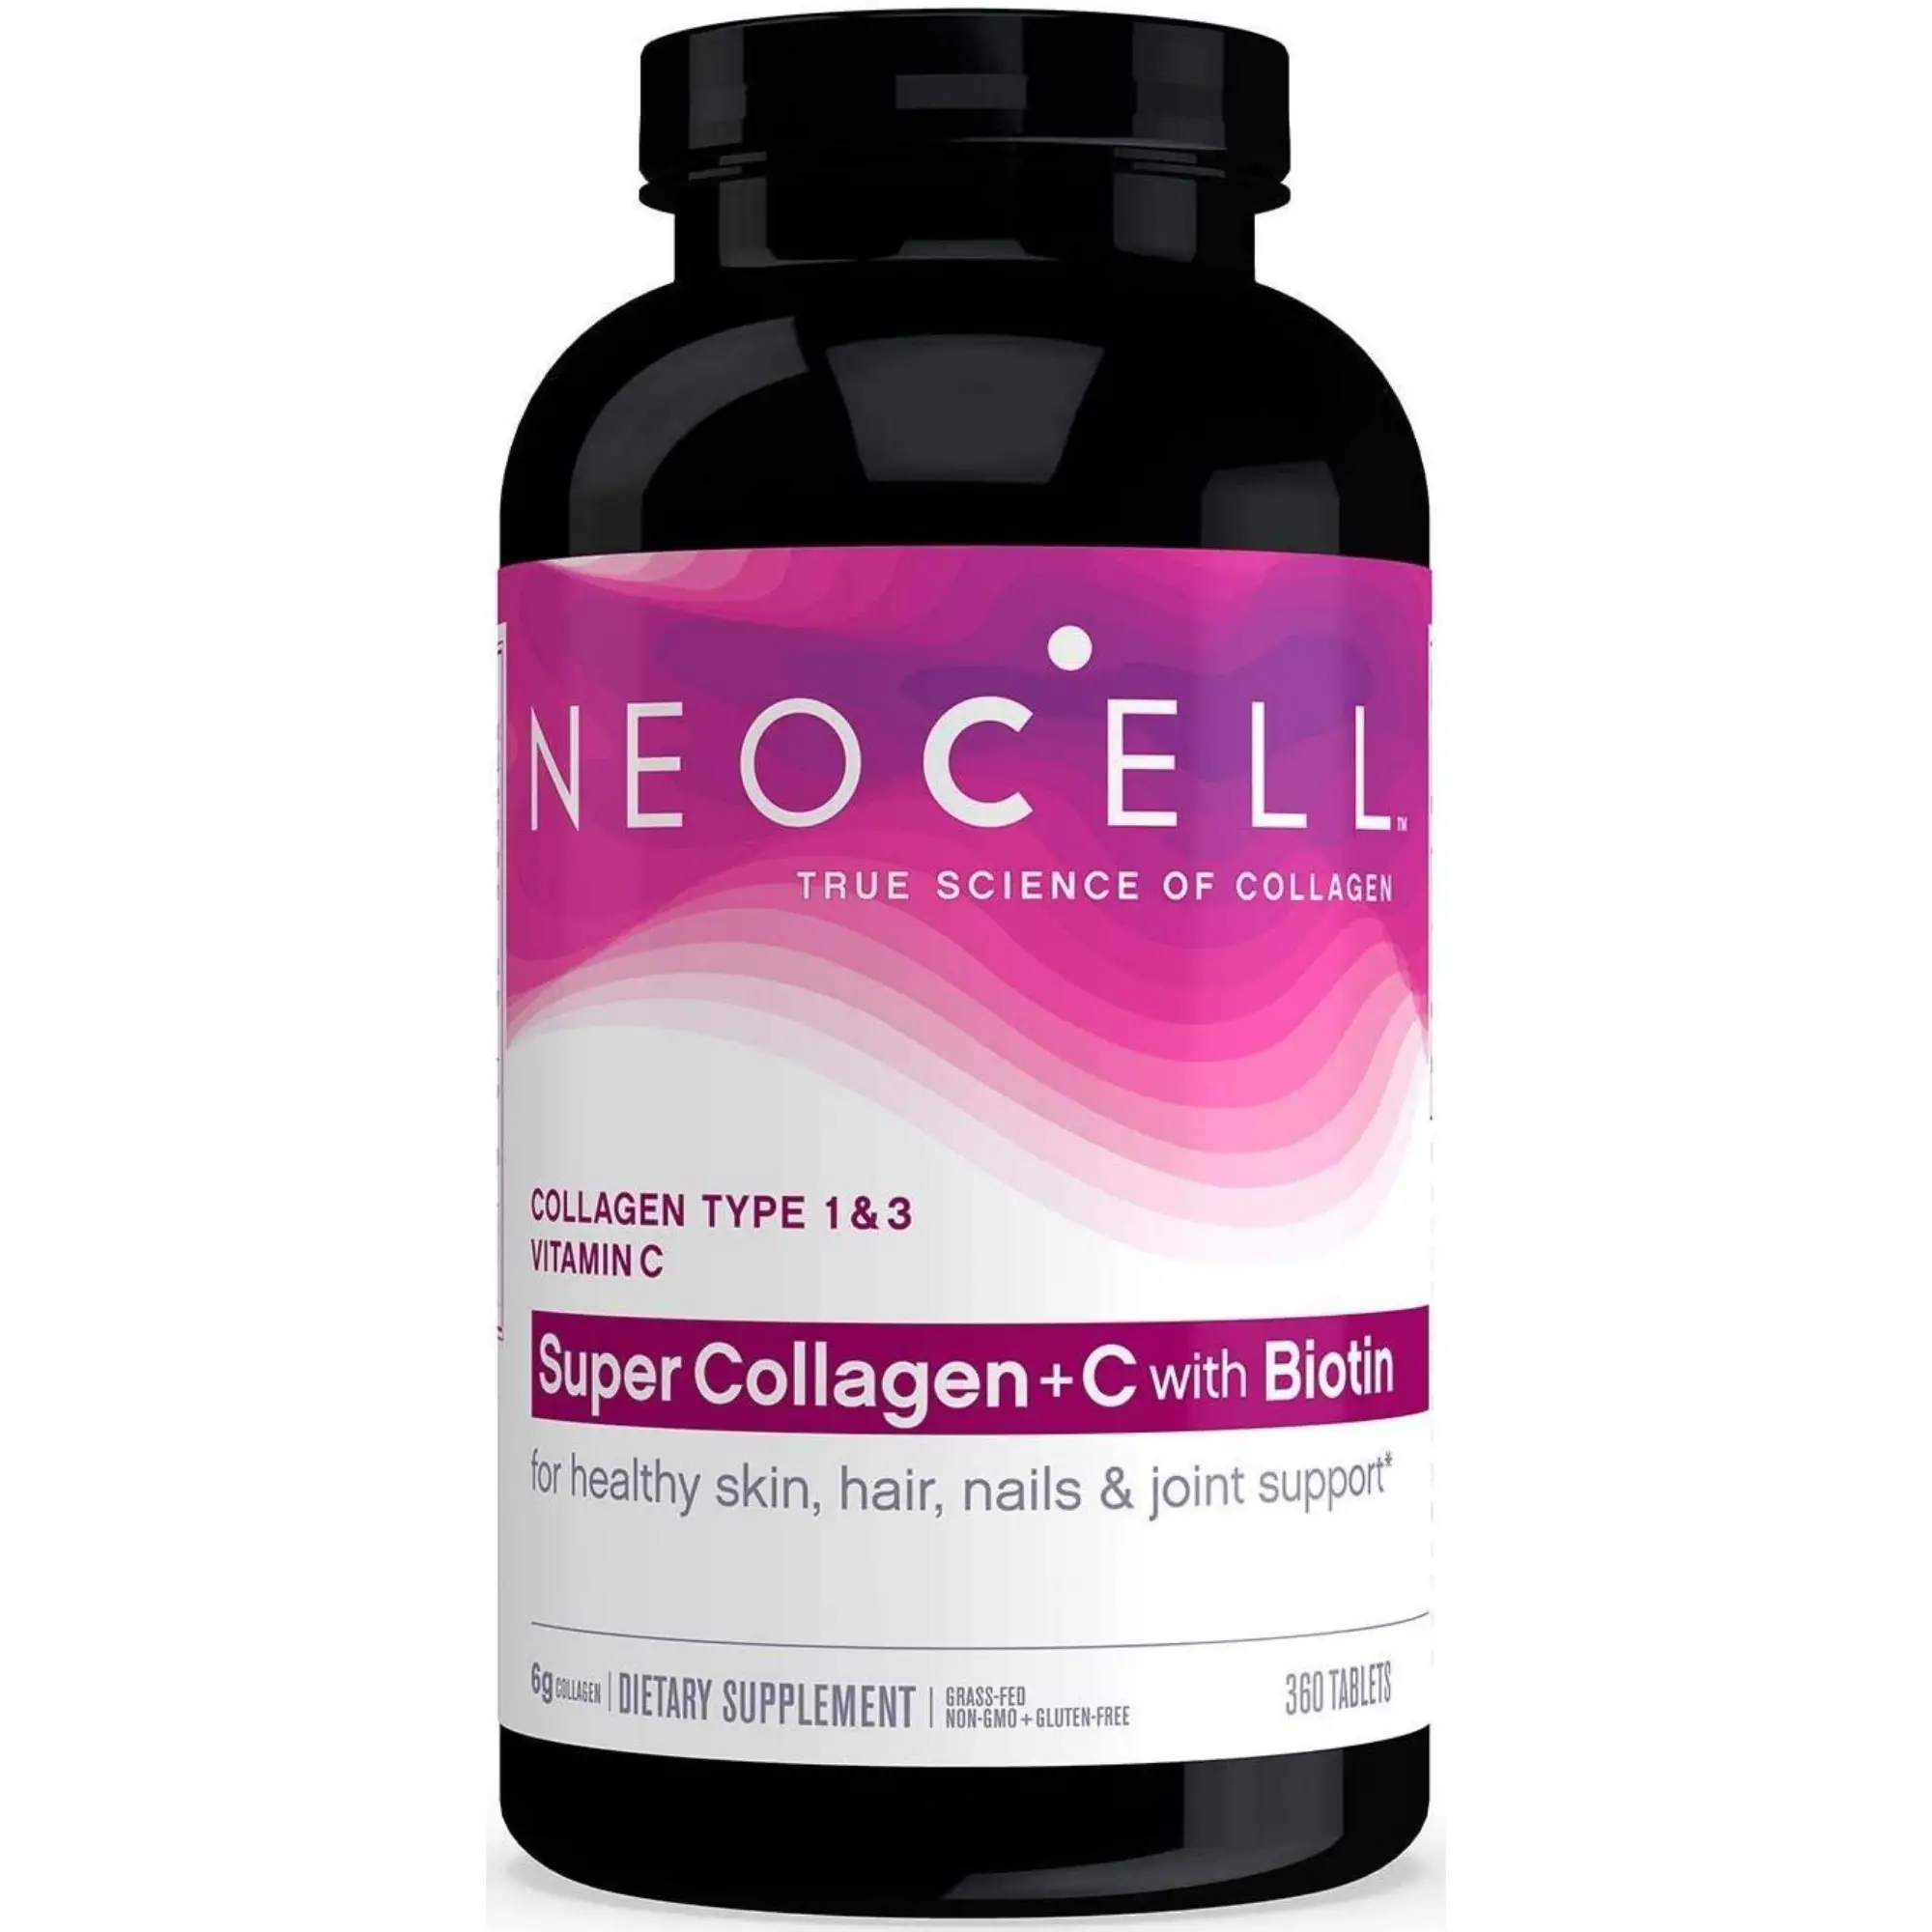 NeoCell Super Collagen + Vitamin C with Biotin